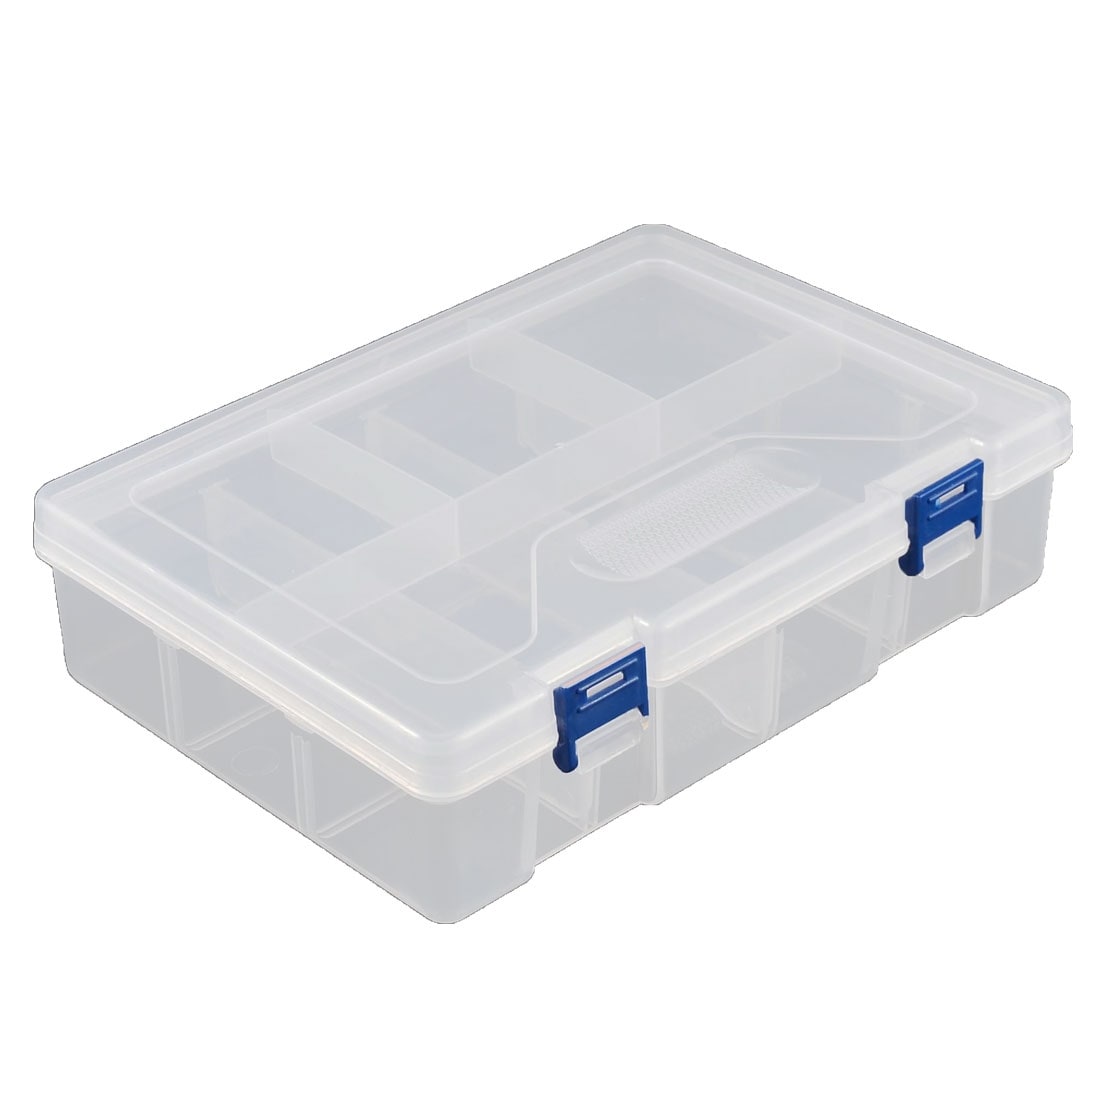 Unique Bargains Desktop Tool Part Hardware Plastic Adjustable Storage Sorter Case Box Organizer